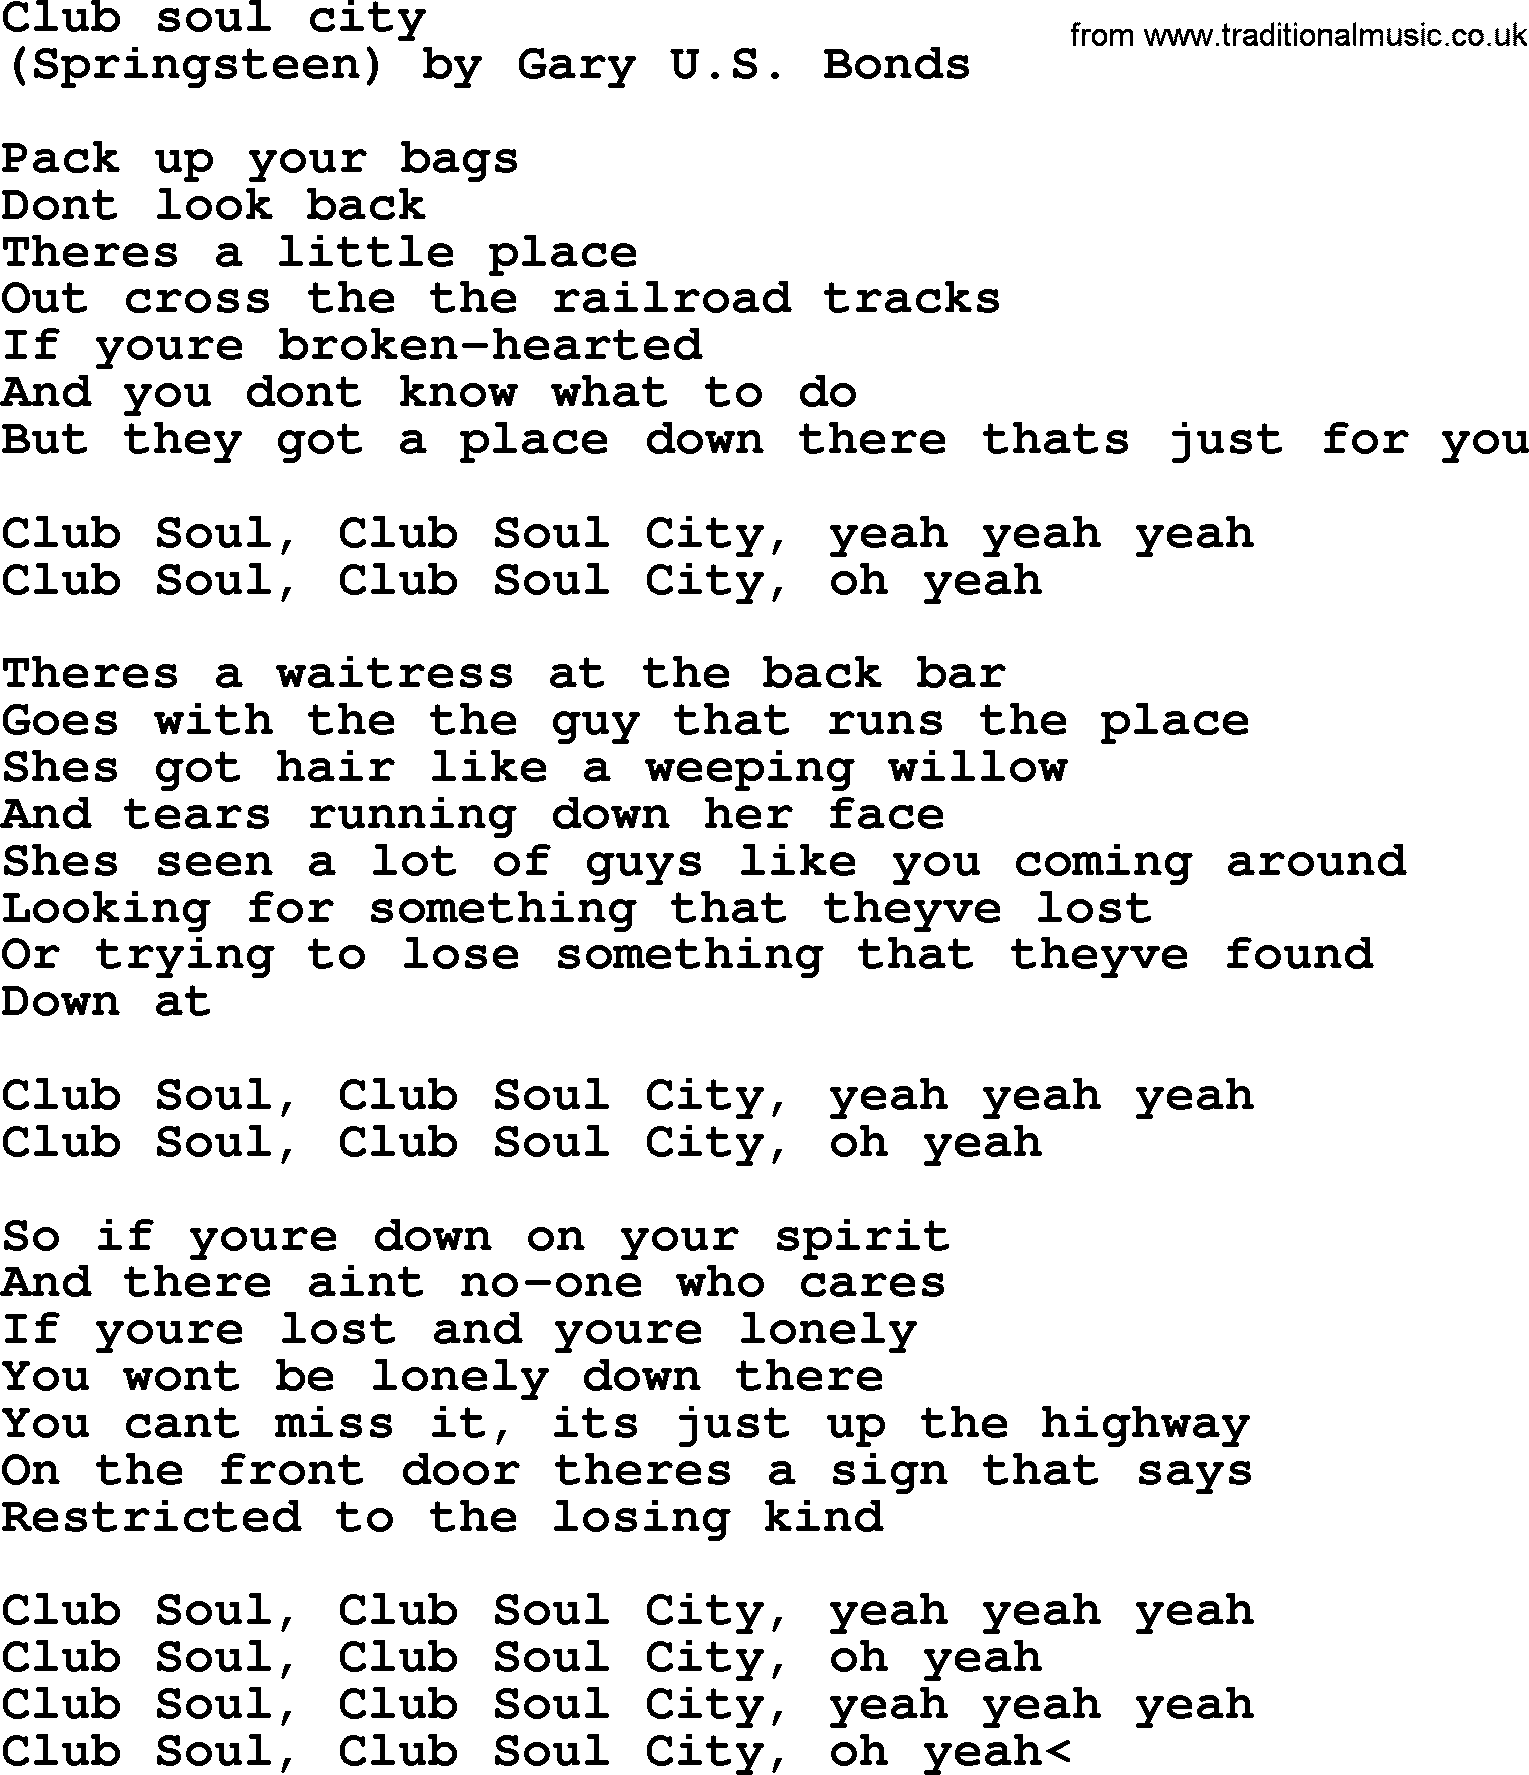 Bruce Springsteen song: Club Soul City lyrics